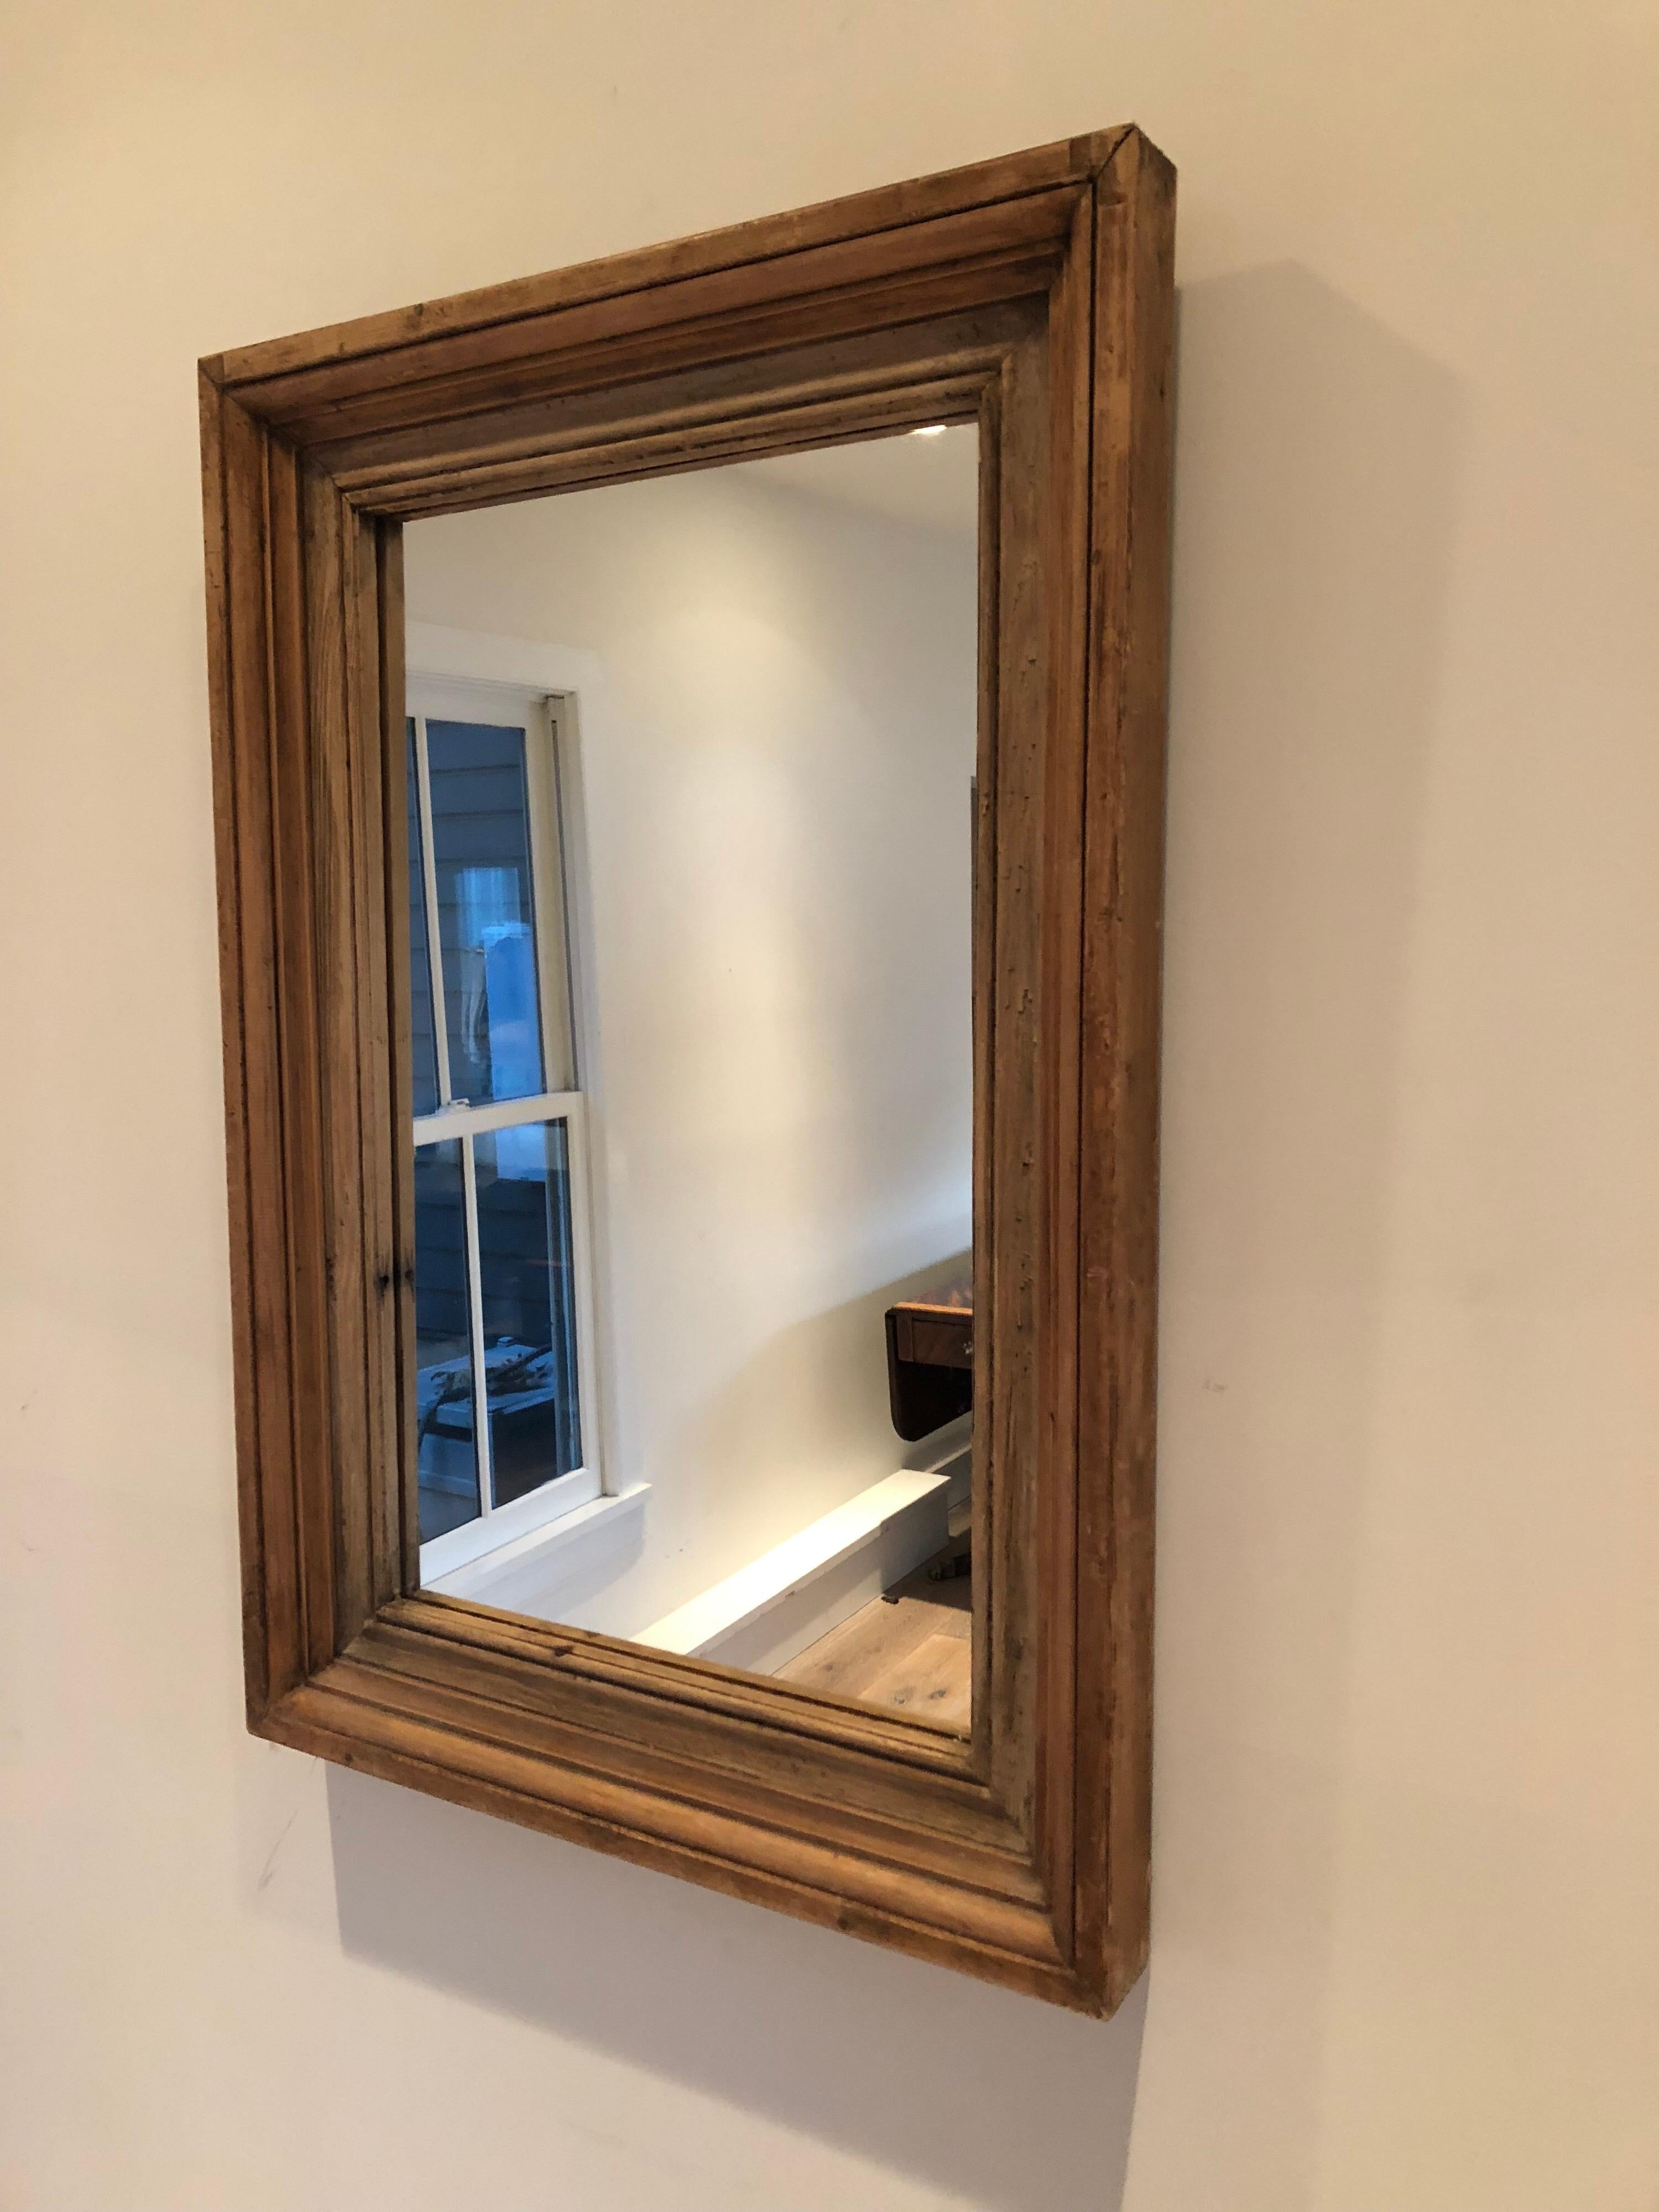 An antique rectangular pine mirror with graduated depth frame.